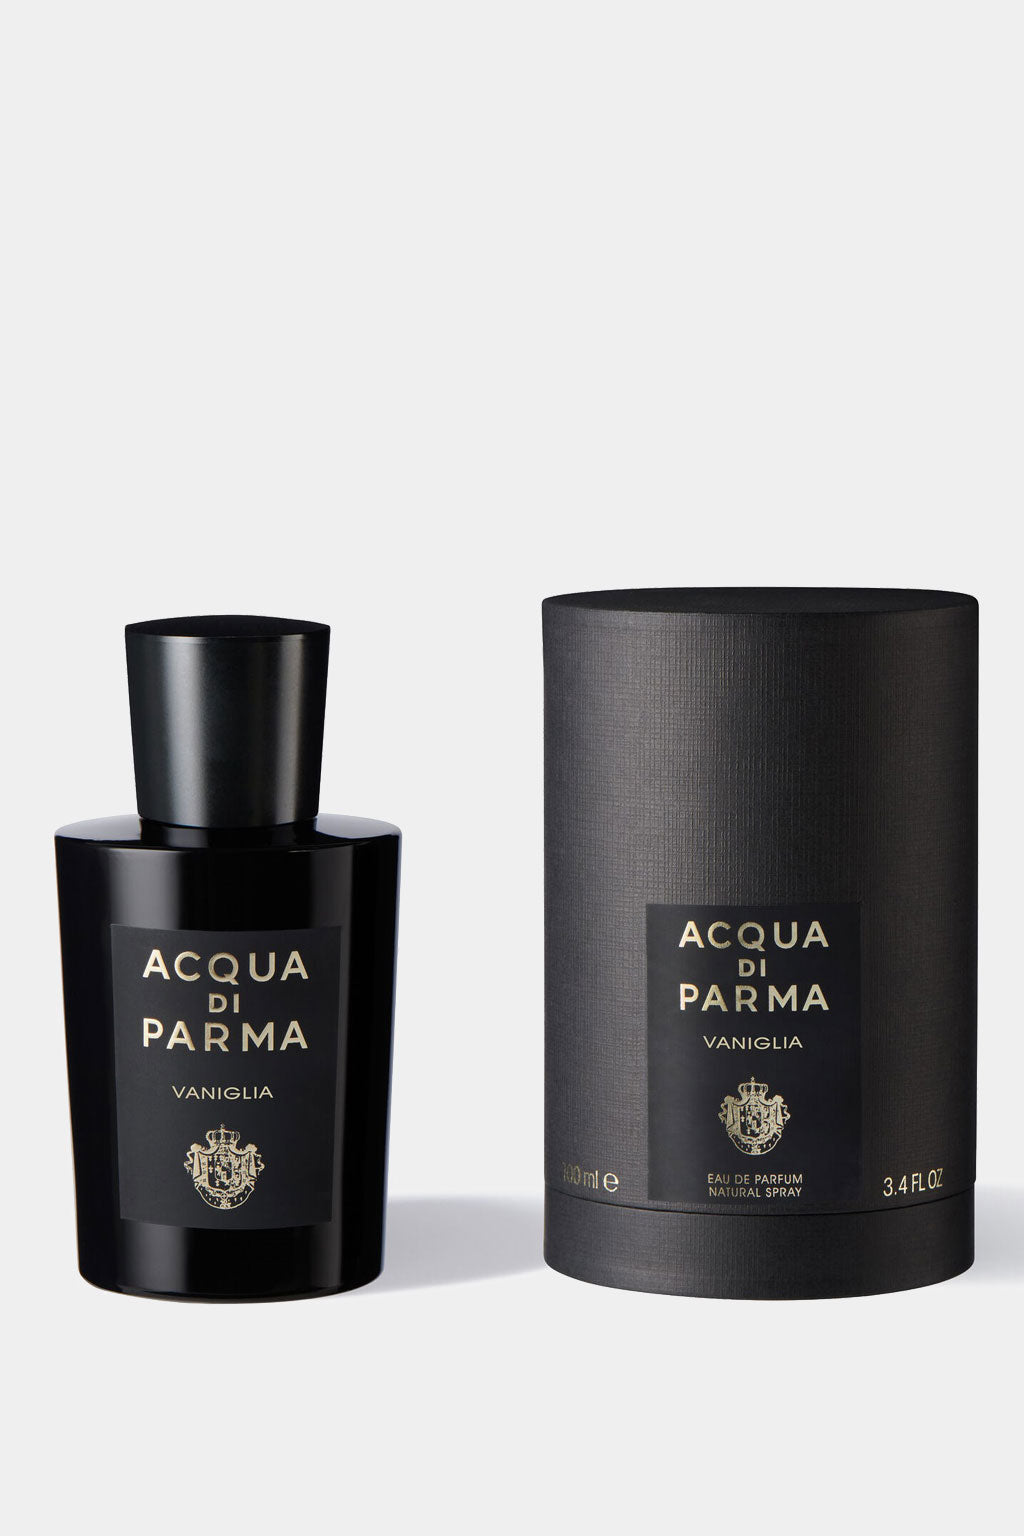 Acqua Di Parma - Vaniglia Eau de Parfum